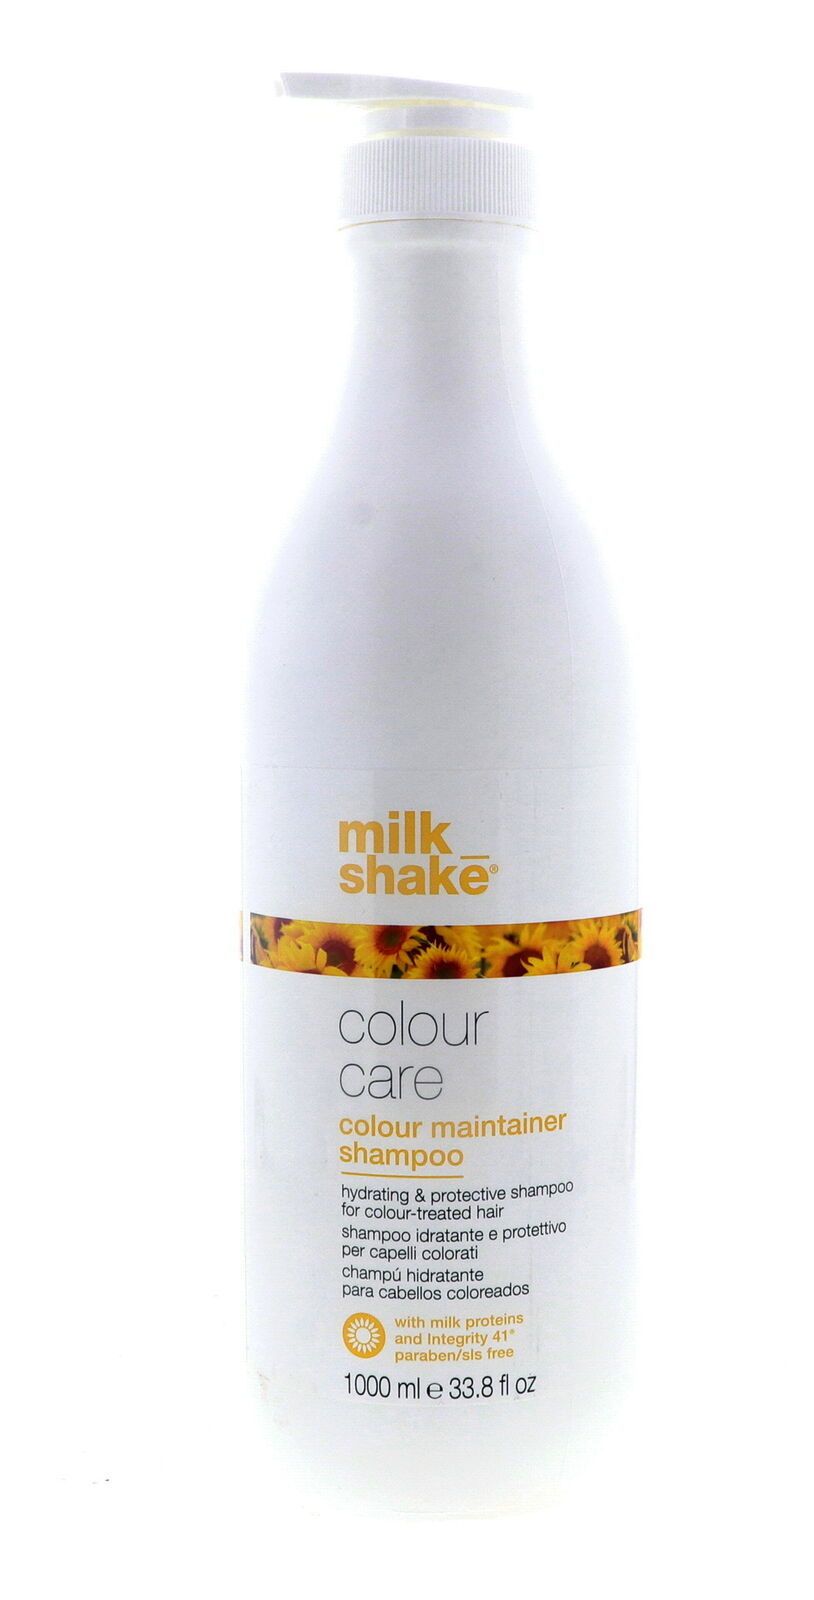 Milk Shake Color Maintainer Shampoo Liter - $65.00